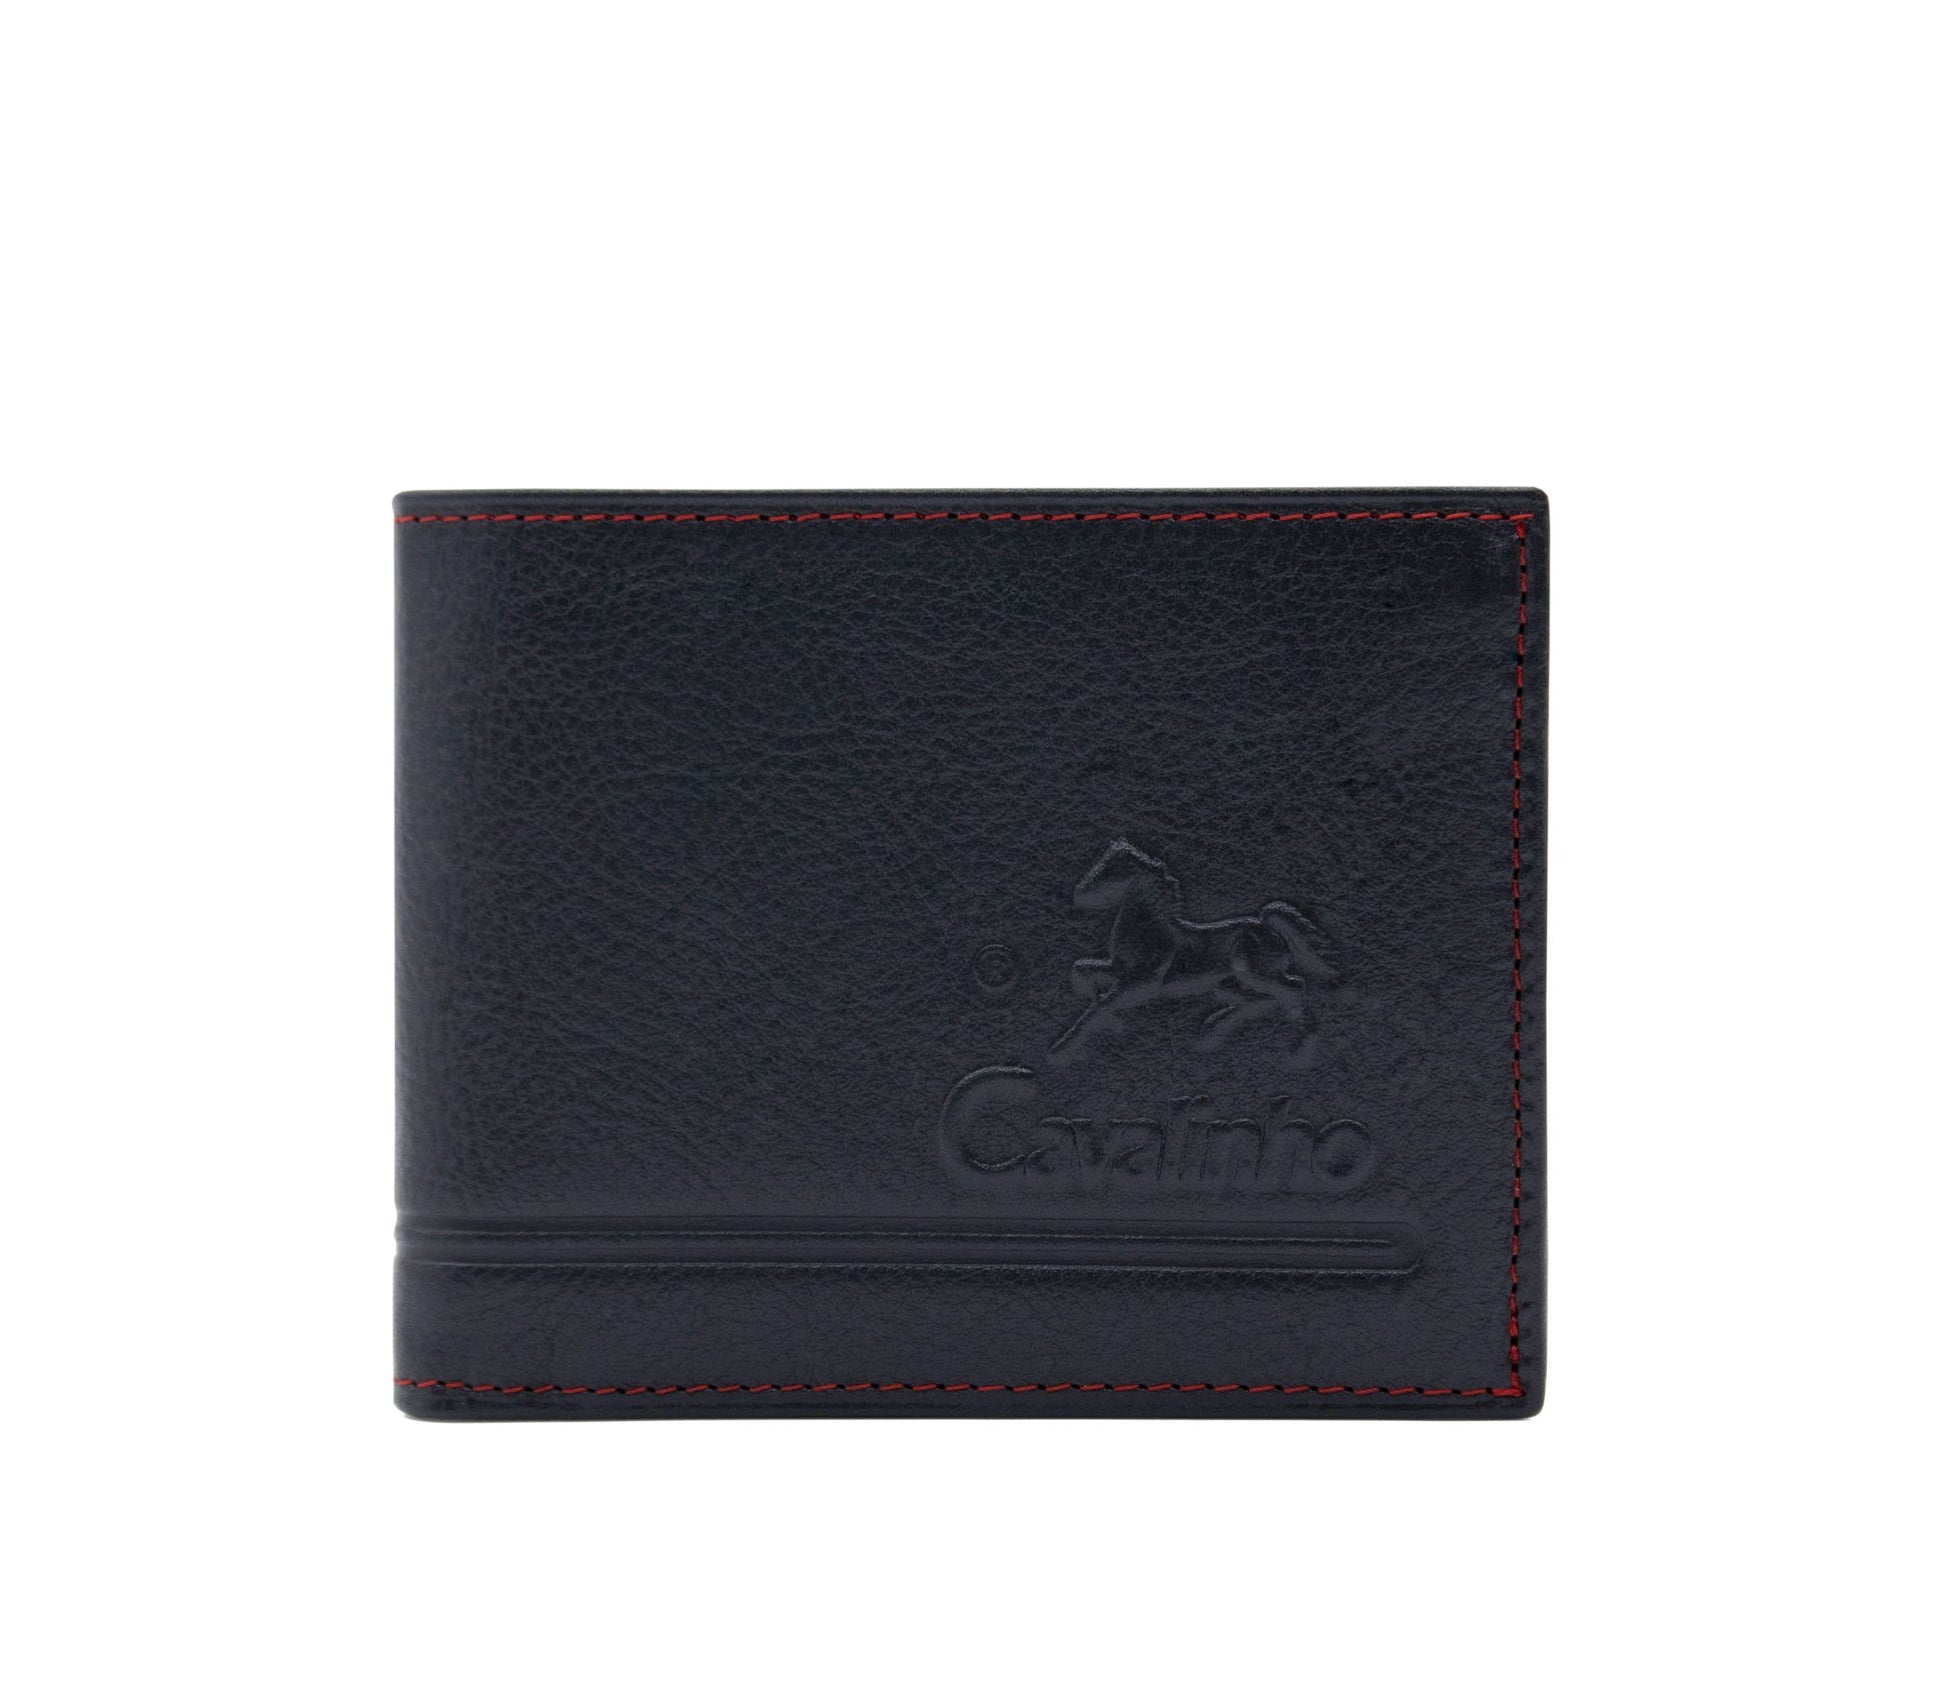 #color_ Navy | Cavalinho Men's Trifold Leather Wallet - Navy - 28640508.03_1_b06f5321-8d3f-4380-9145-d708f520d137